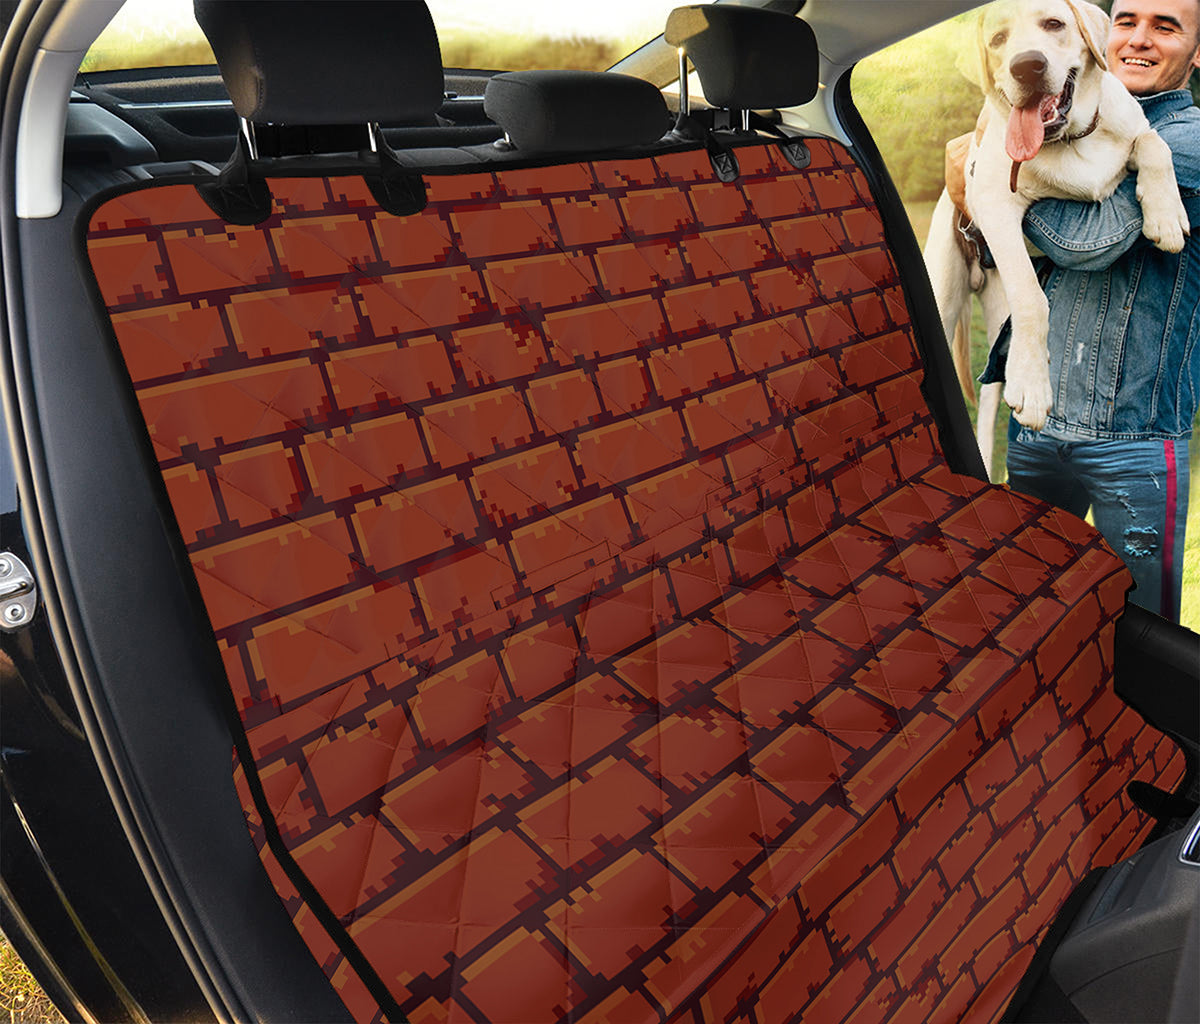 8-Bit Pixel Brick Wall Print Pet Car Back Seat Cover